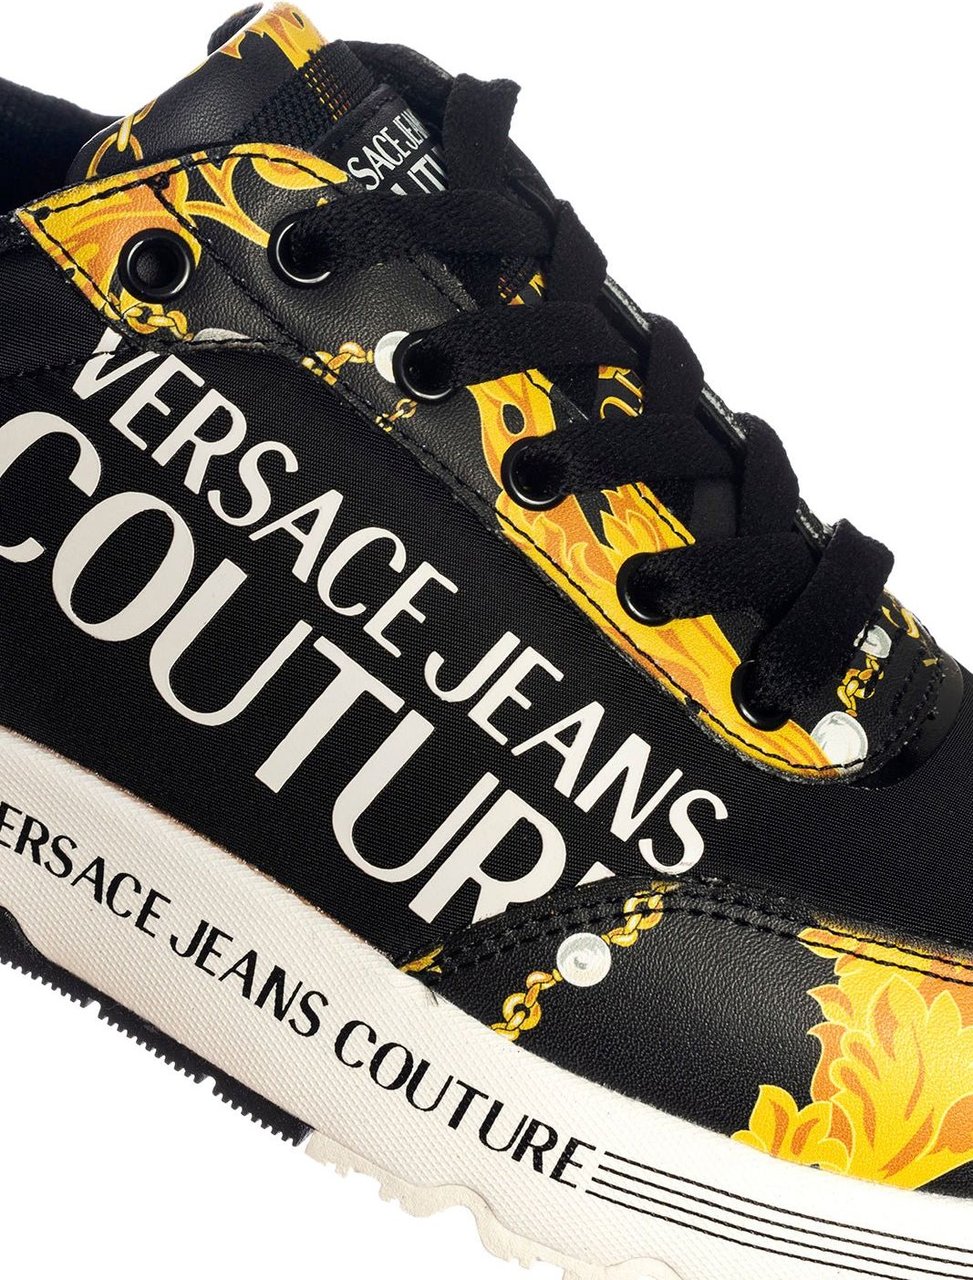 Versace Jeans Couture Versace Jeans Couture Fondo Dynamic Sneaker Dames Zwart/Goud Goud